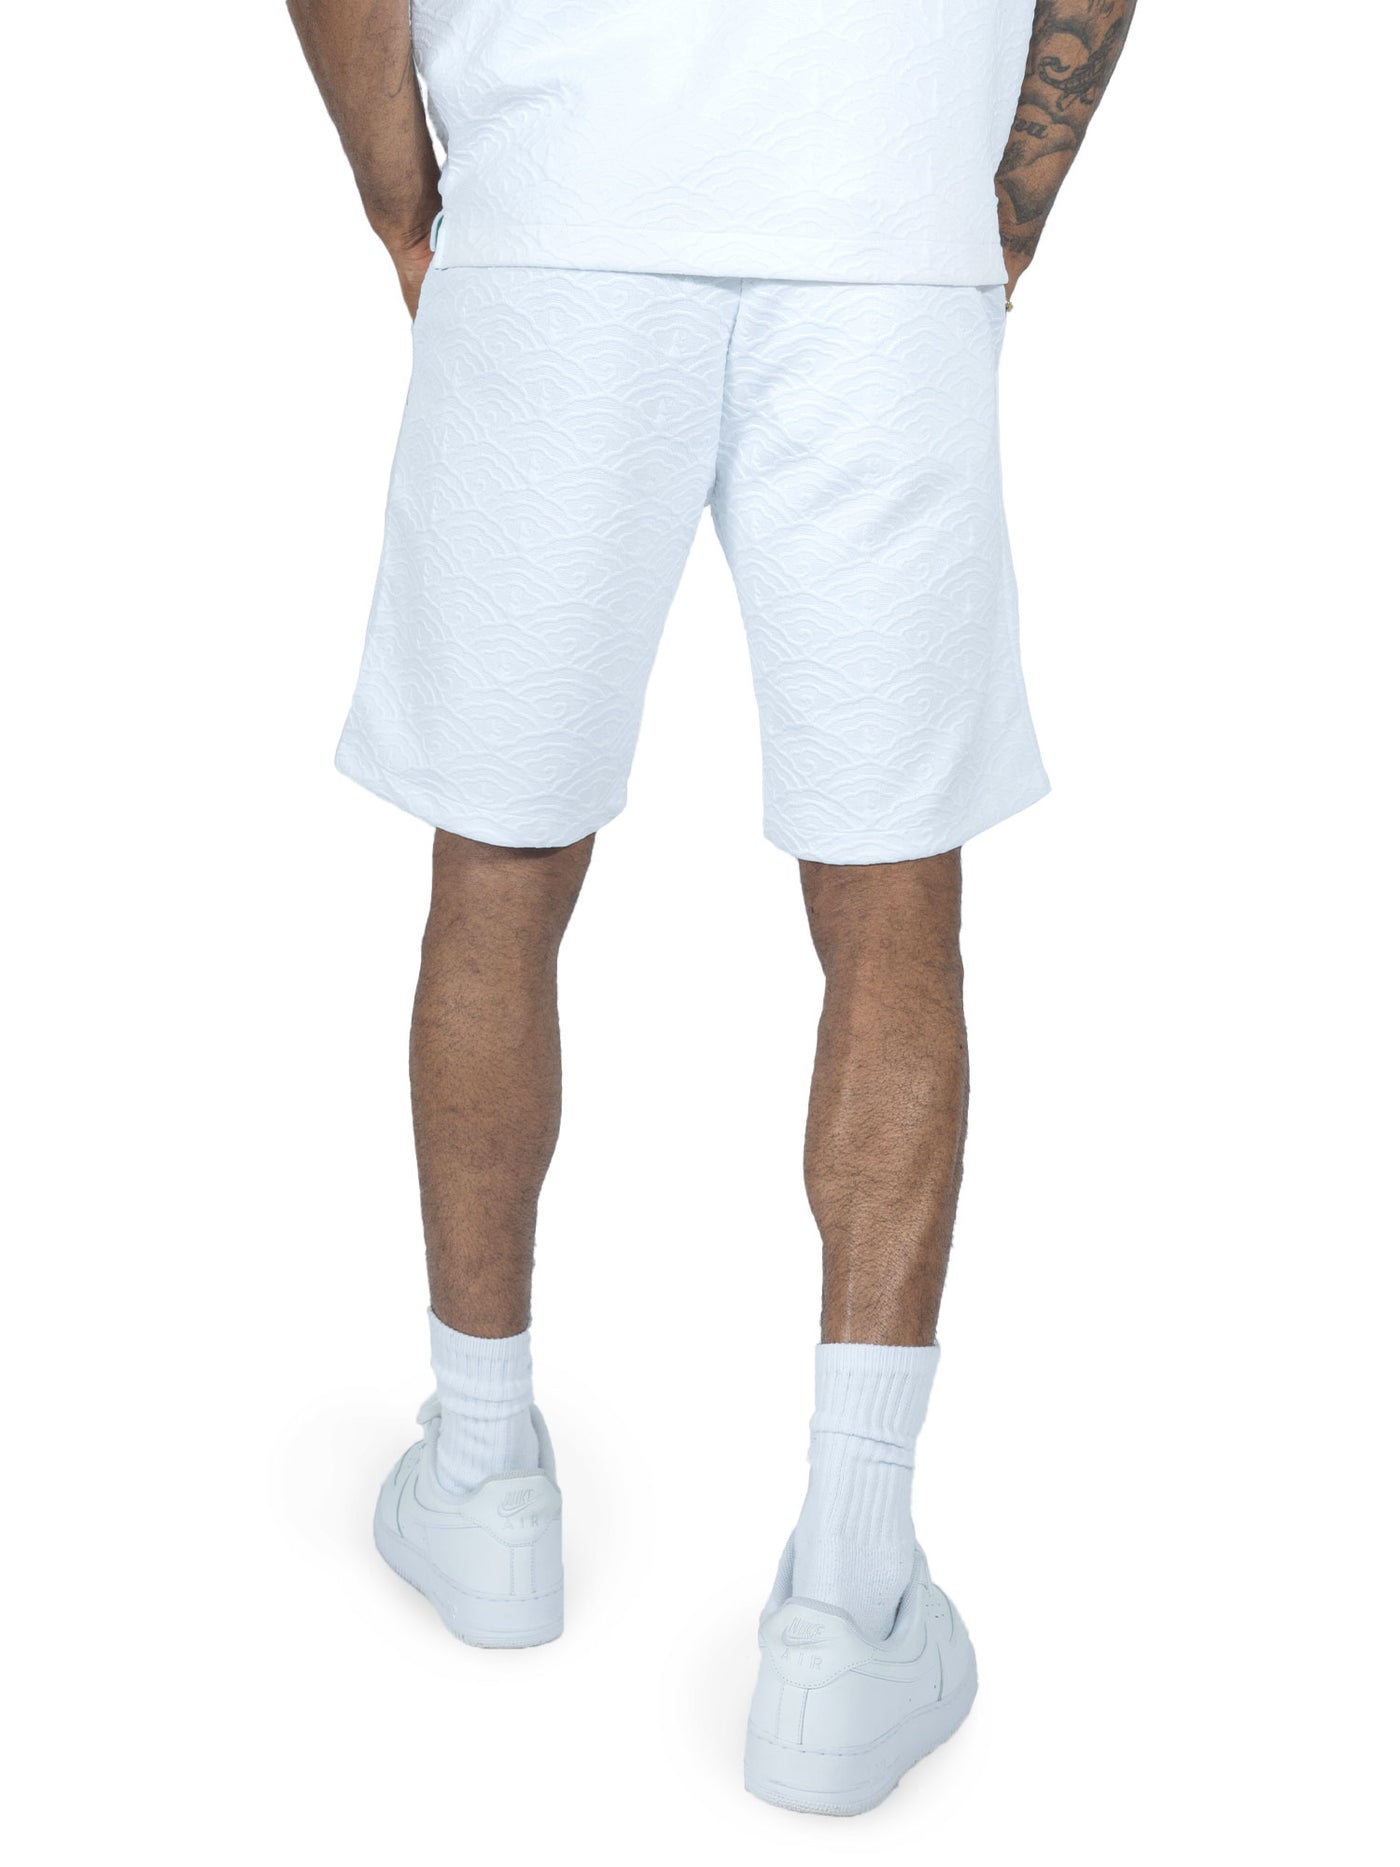 M654 Bellagio Shorts - White